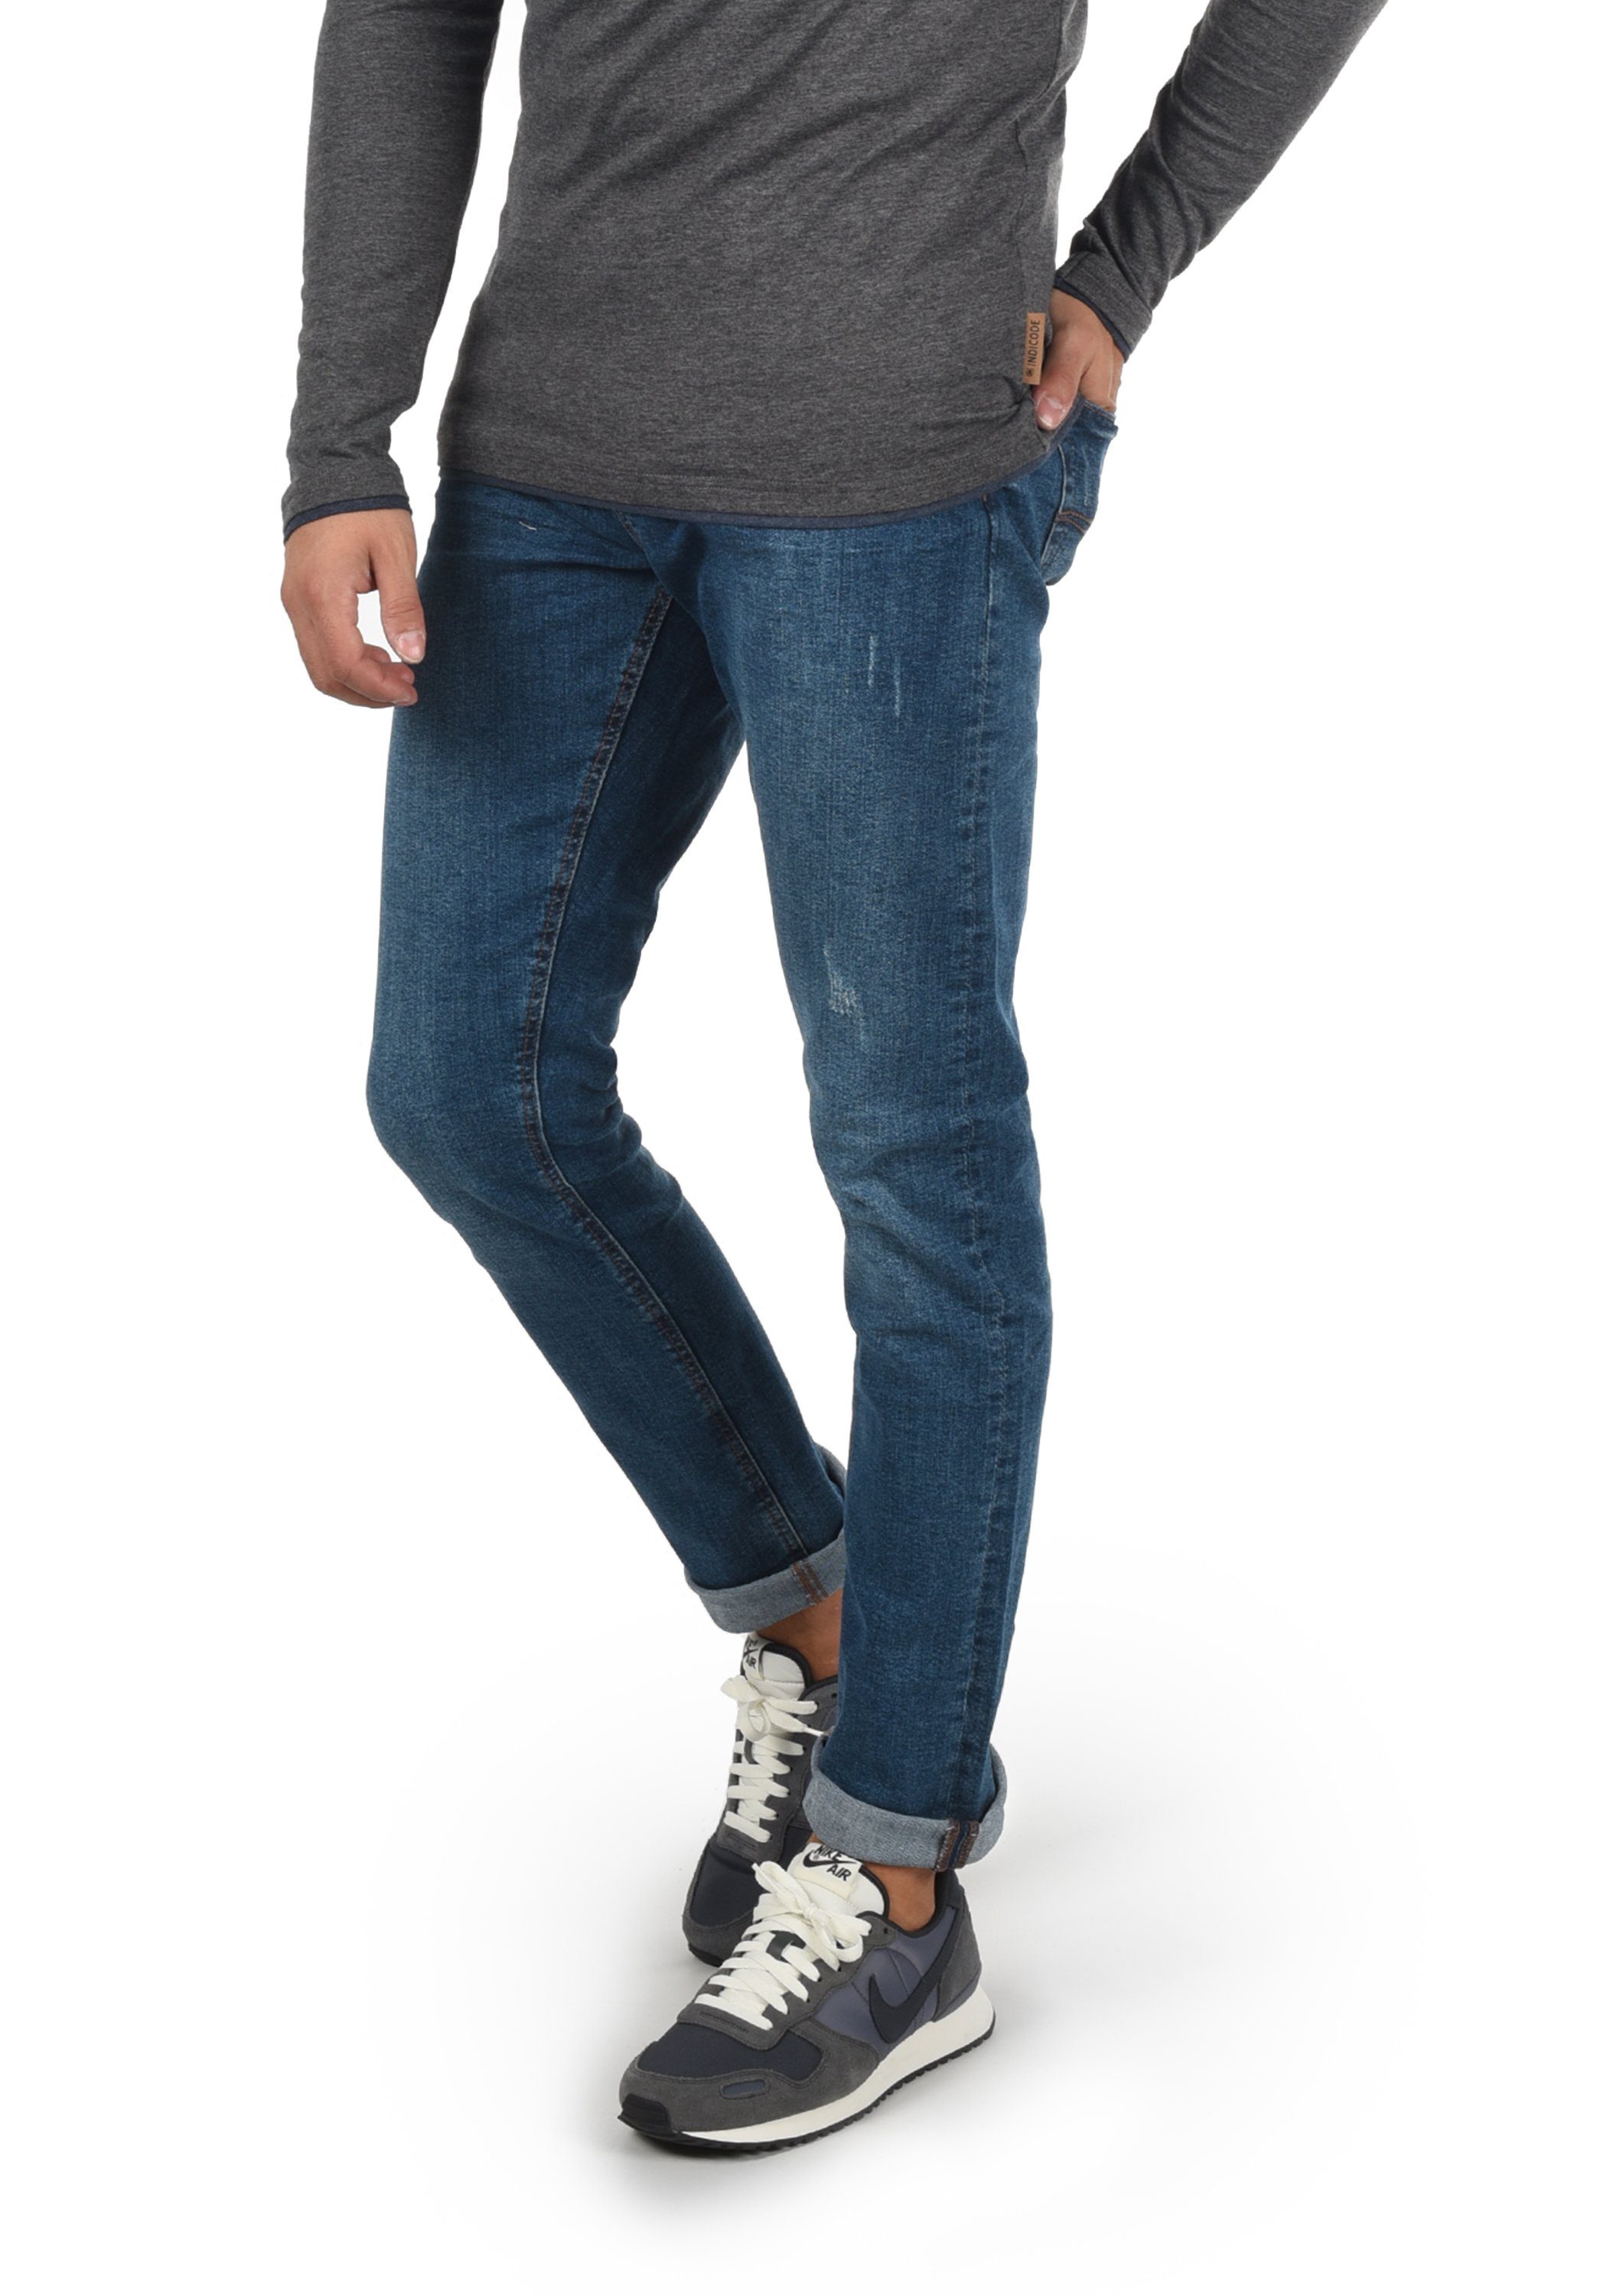 5-Pocket-Jeans Indicode Medium (869) IDAldersgate Indigo